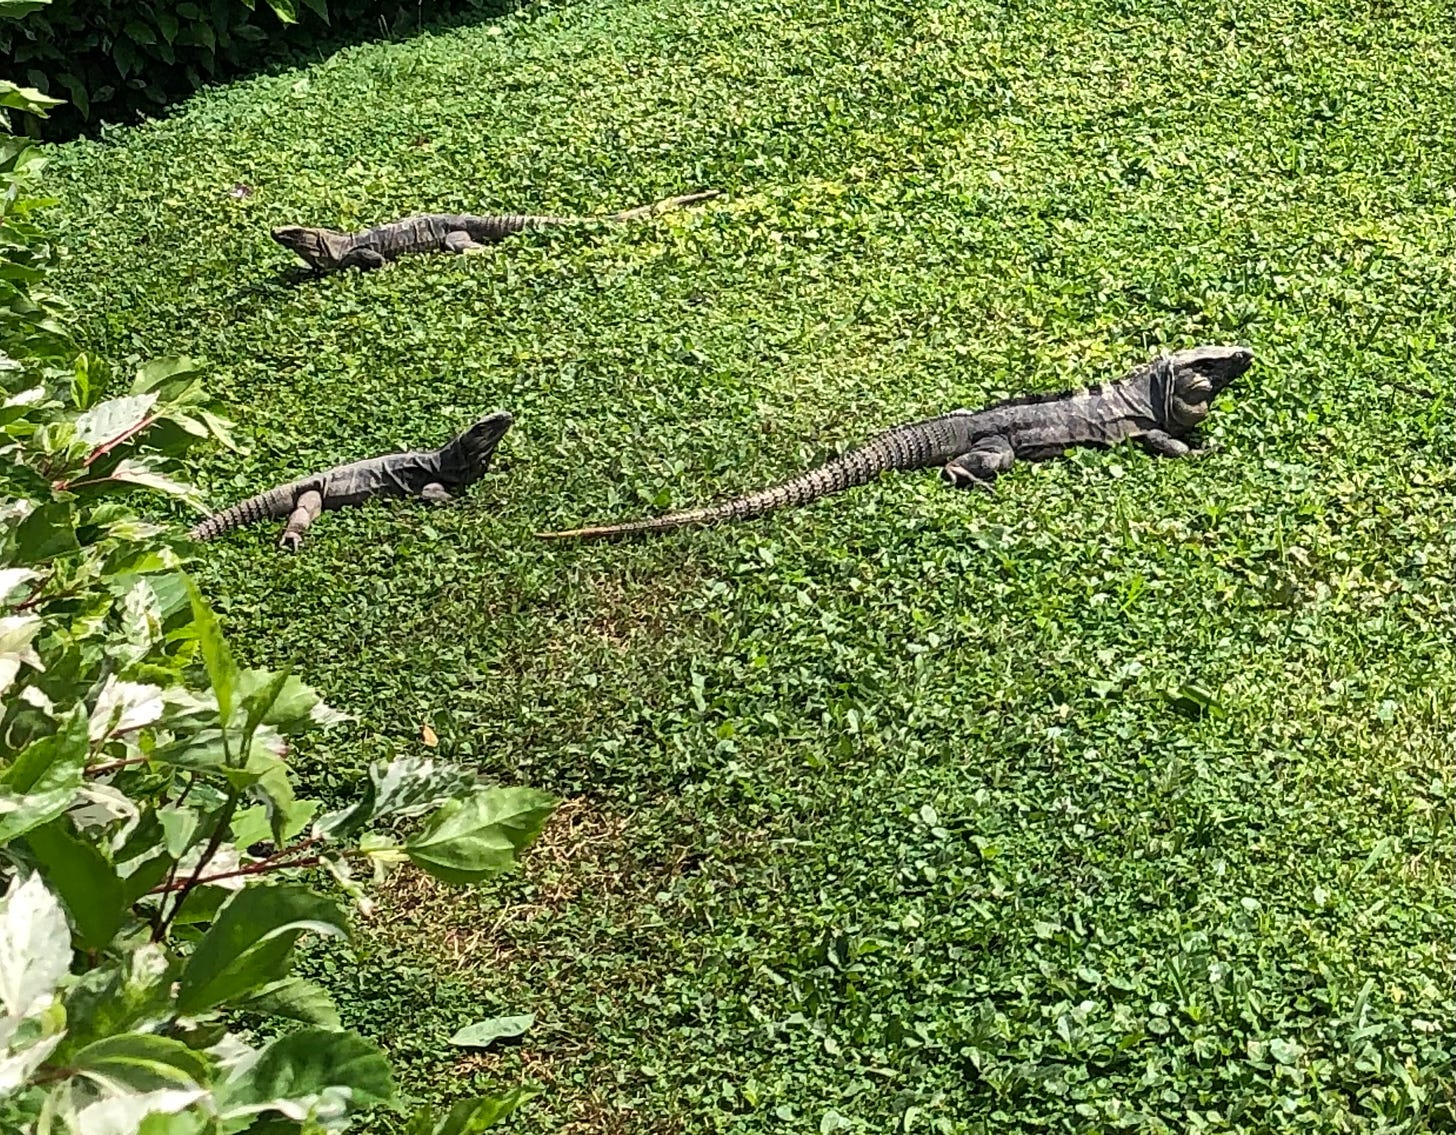 A grassy slope with three iguanas.